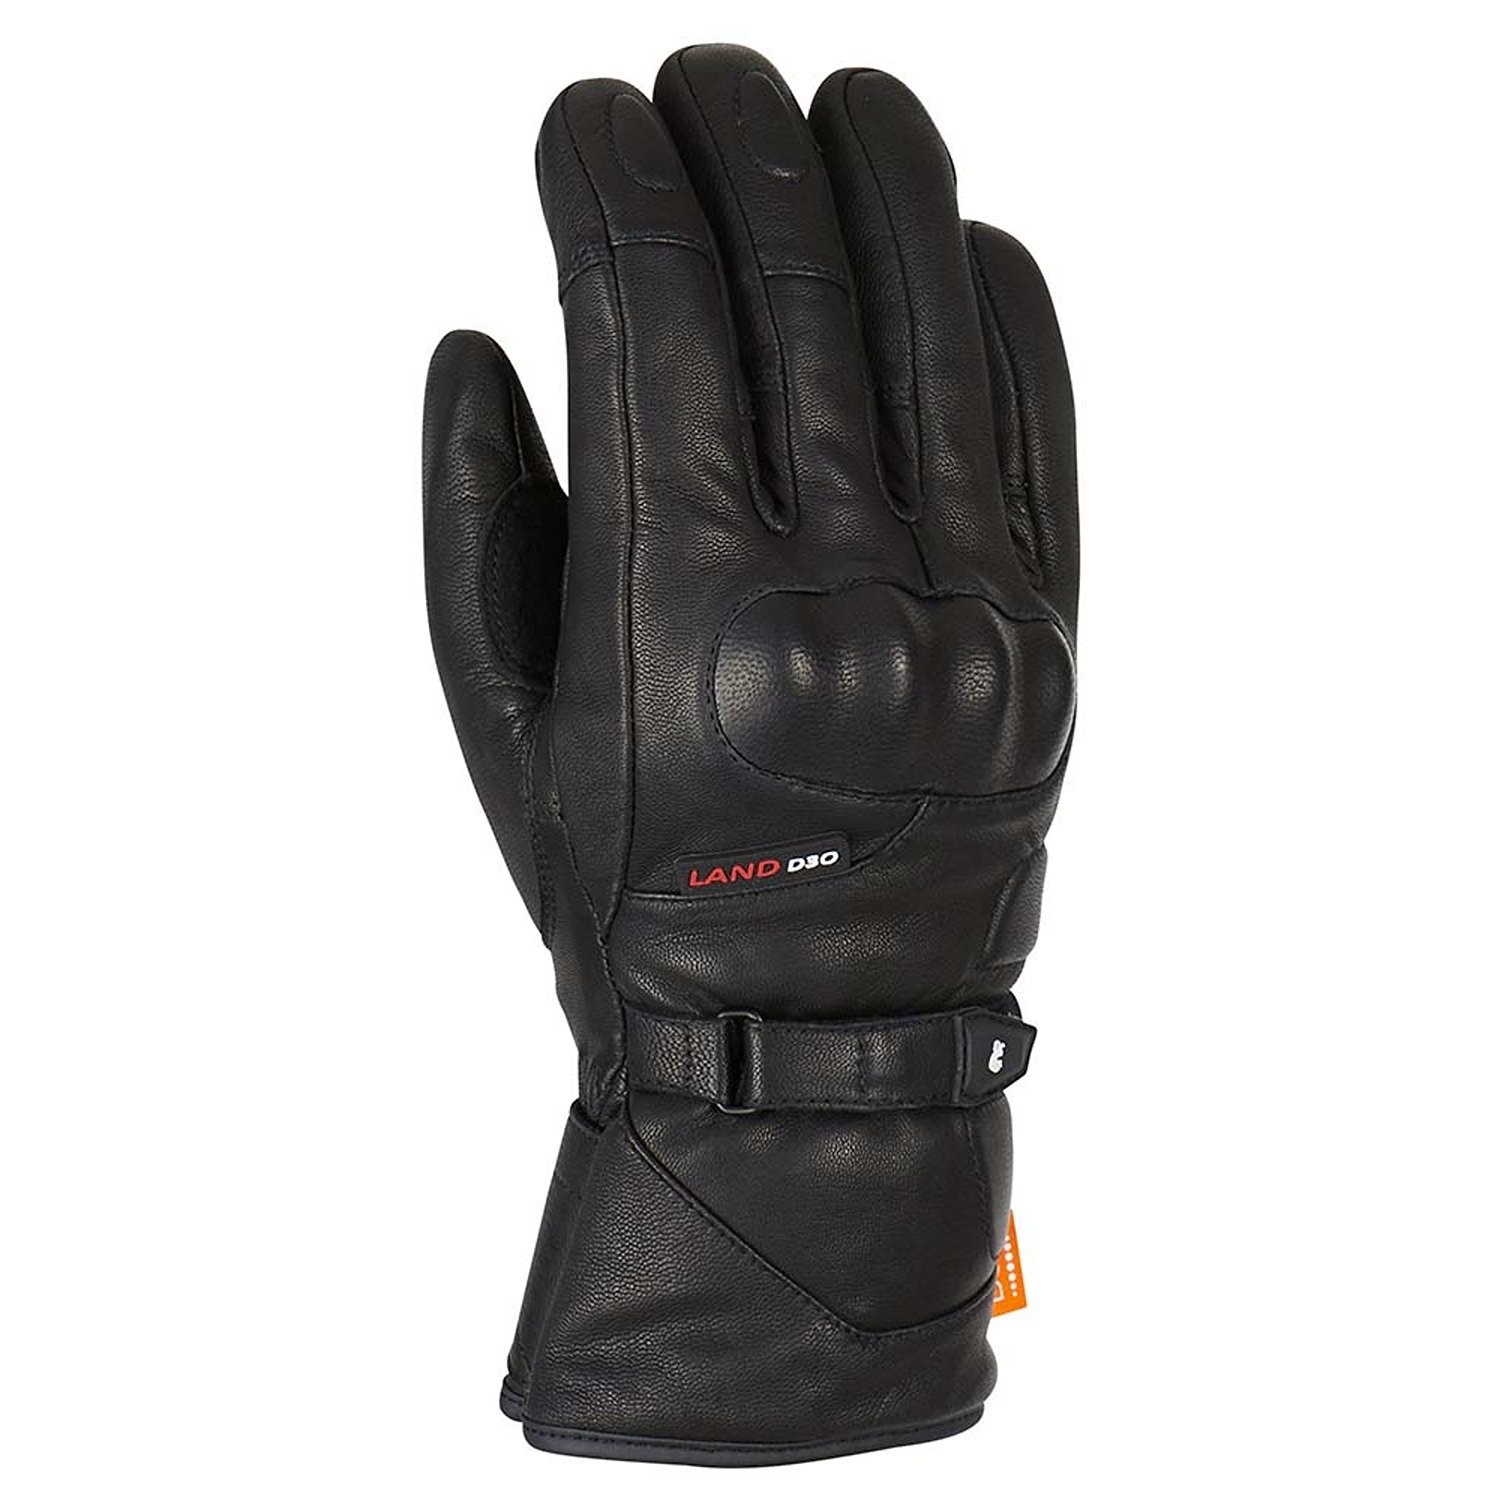 Image of Furygan Land DK D30 Gloves Black Talla L